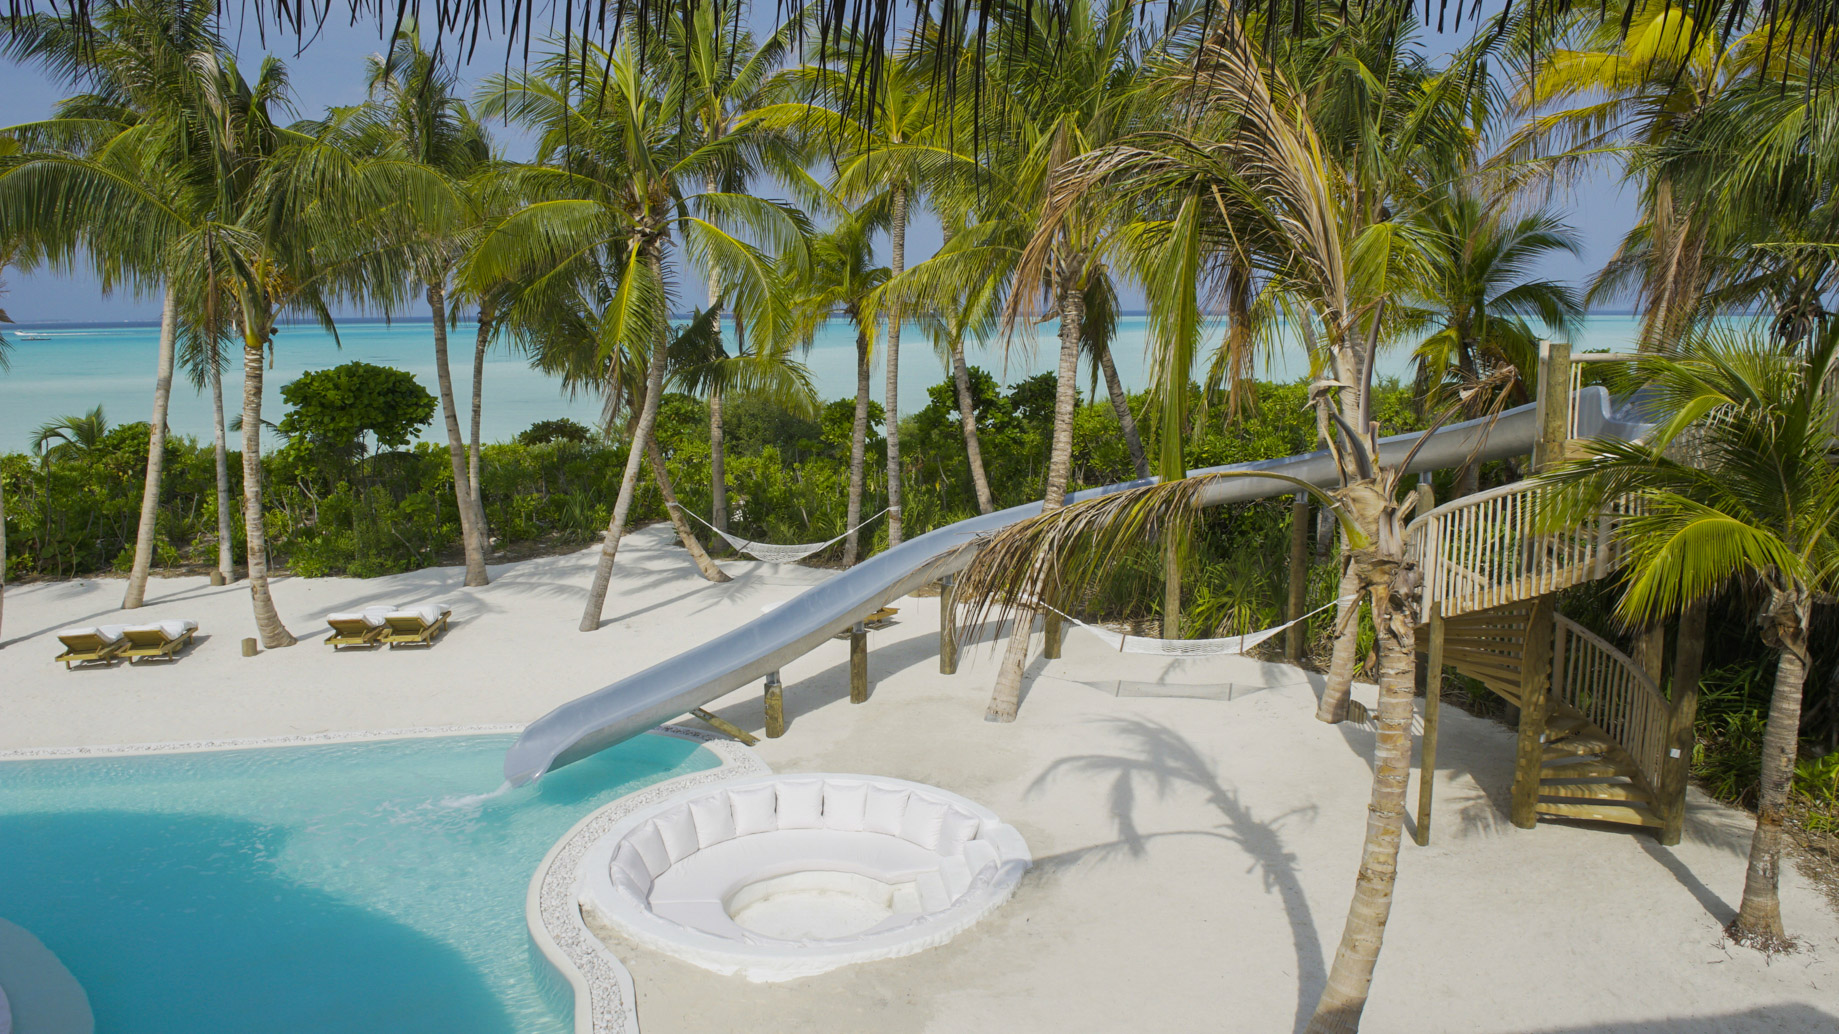 Soneva Jani Resort – Noonu Atoll, Medhufaru, Maldives – 4 Bedroom Island Reserve Villa Beachfront Pool Water Slide